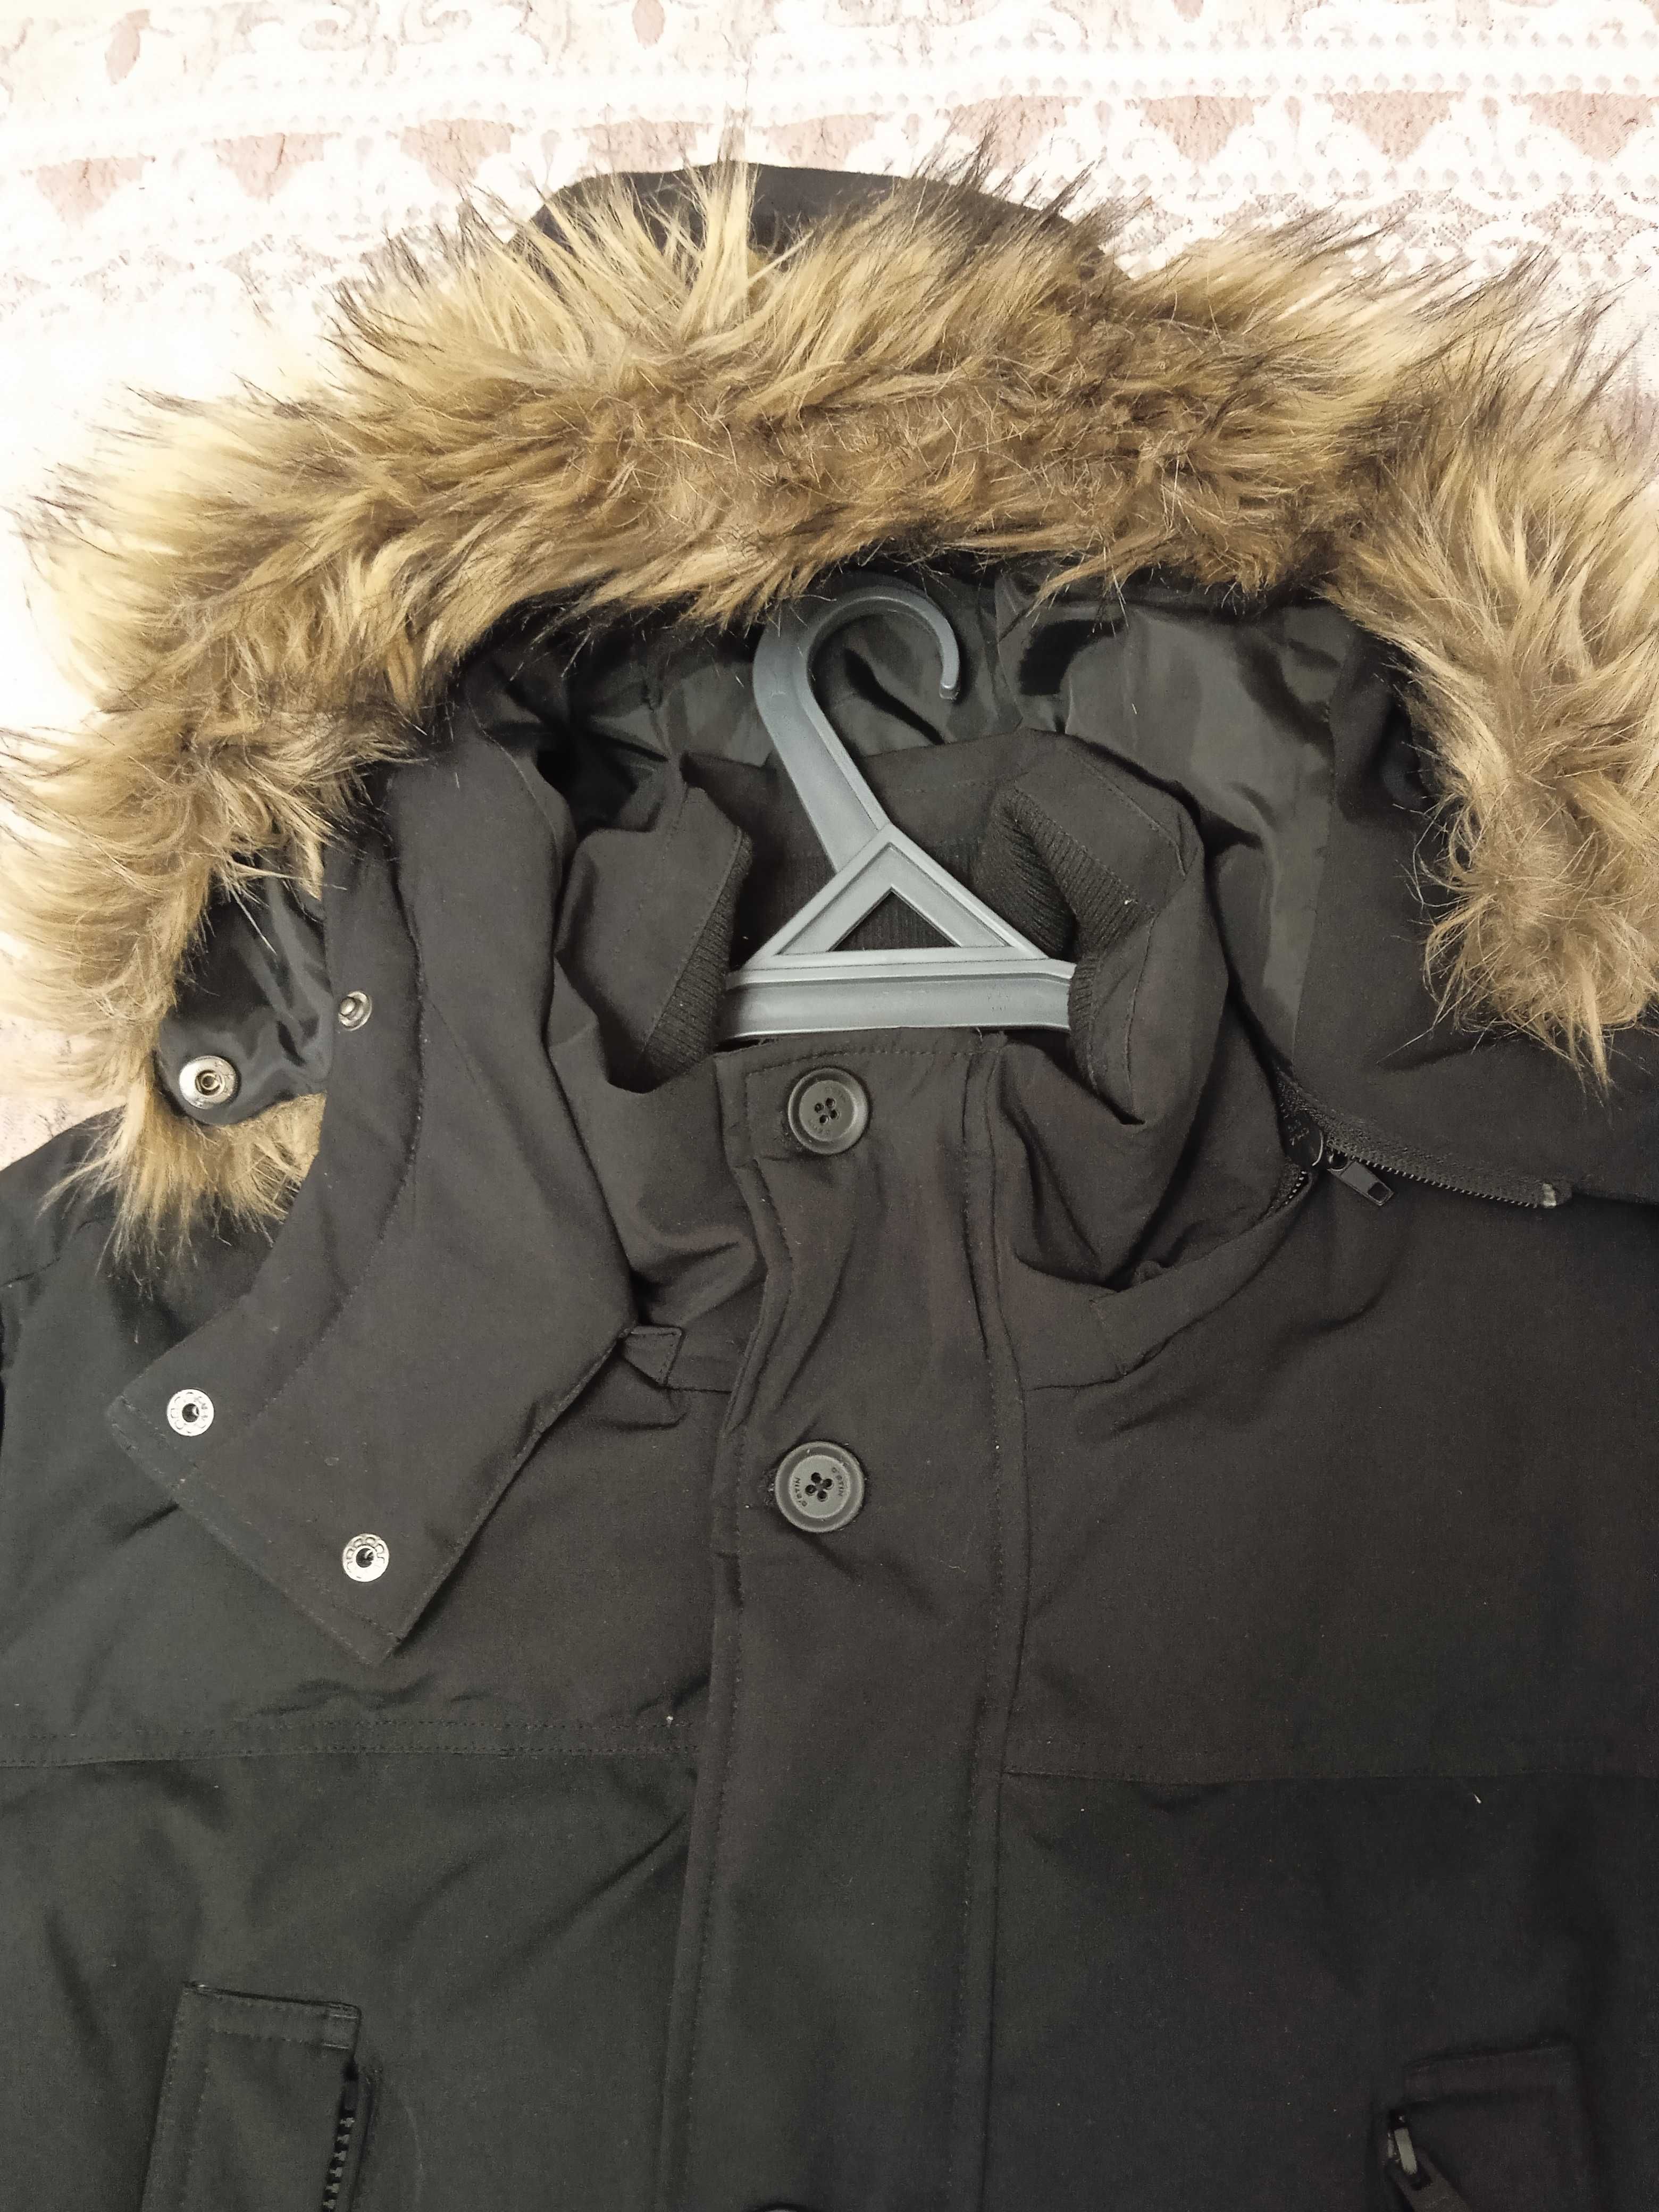 Продам зимнюю куртку мужскую OSTIN размер 50